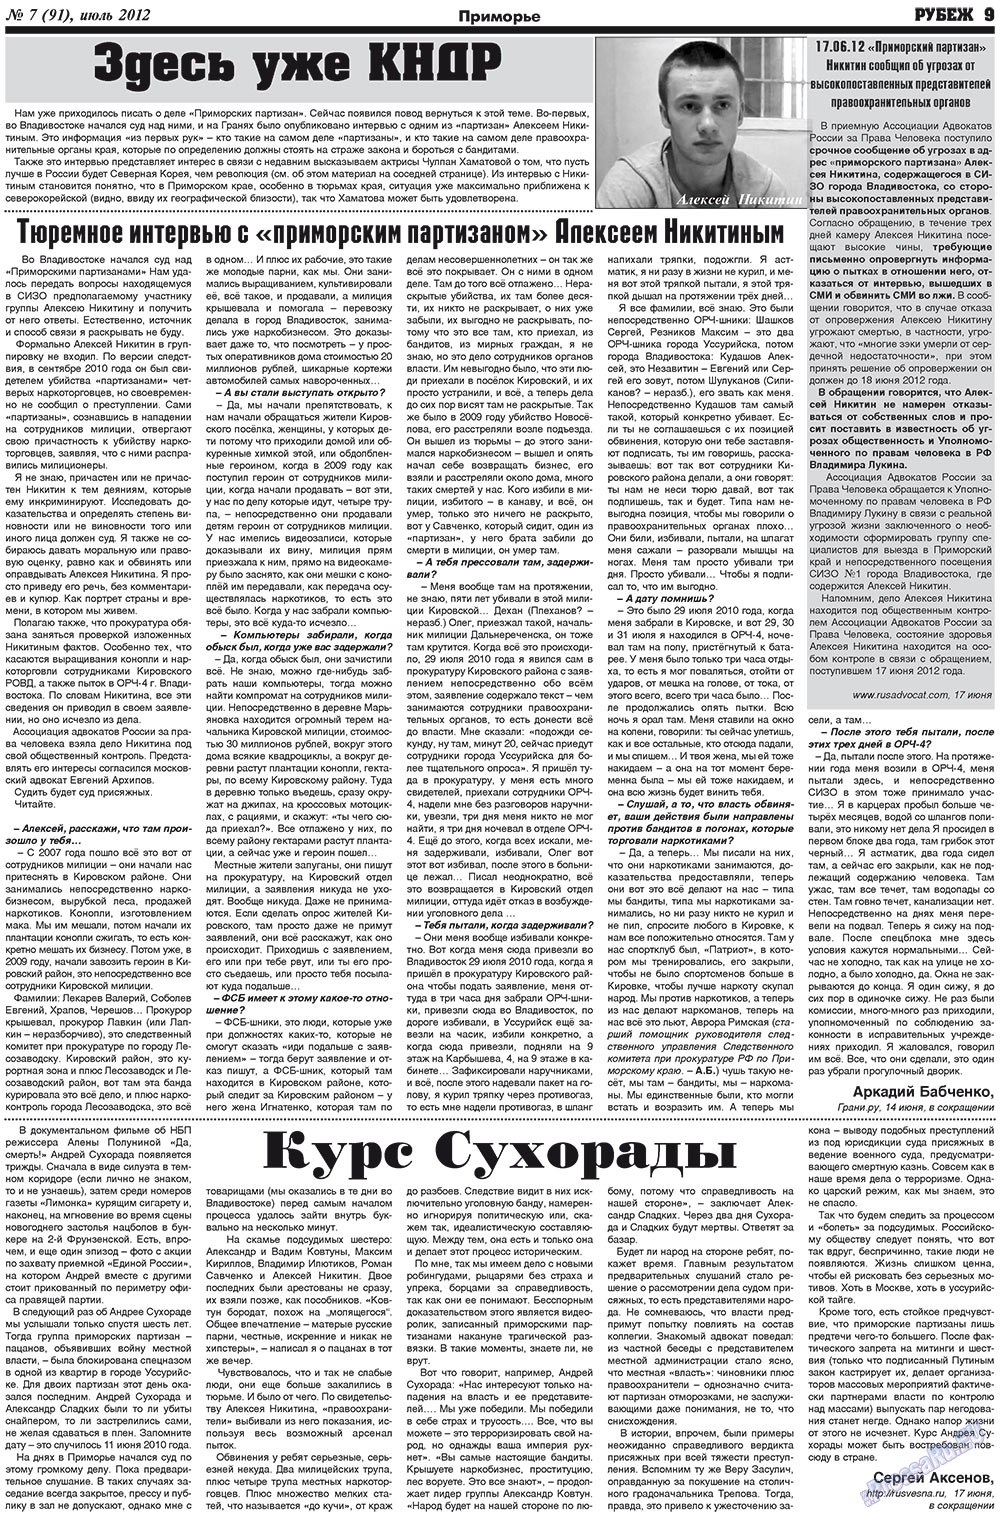 Рубеж, газета. 2012 №7 стр.9